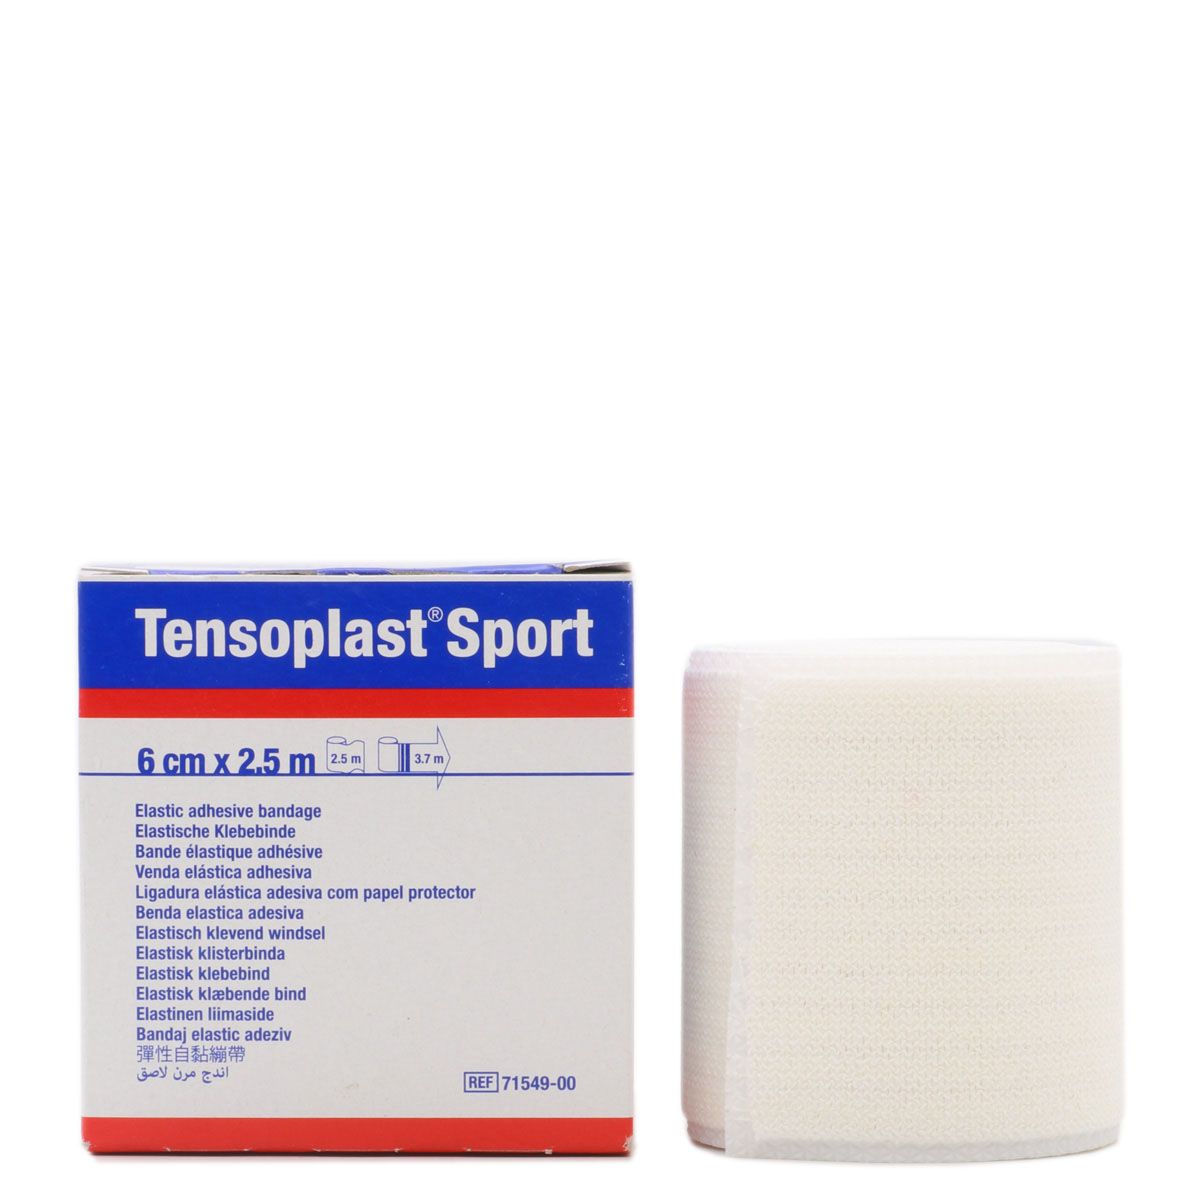 Tensoplast Sport. Venda elástica adhesiva para Strapping. 6 cm x 2,5 m